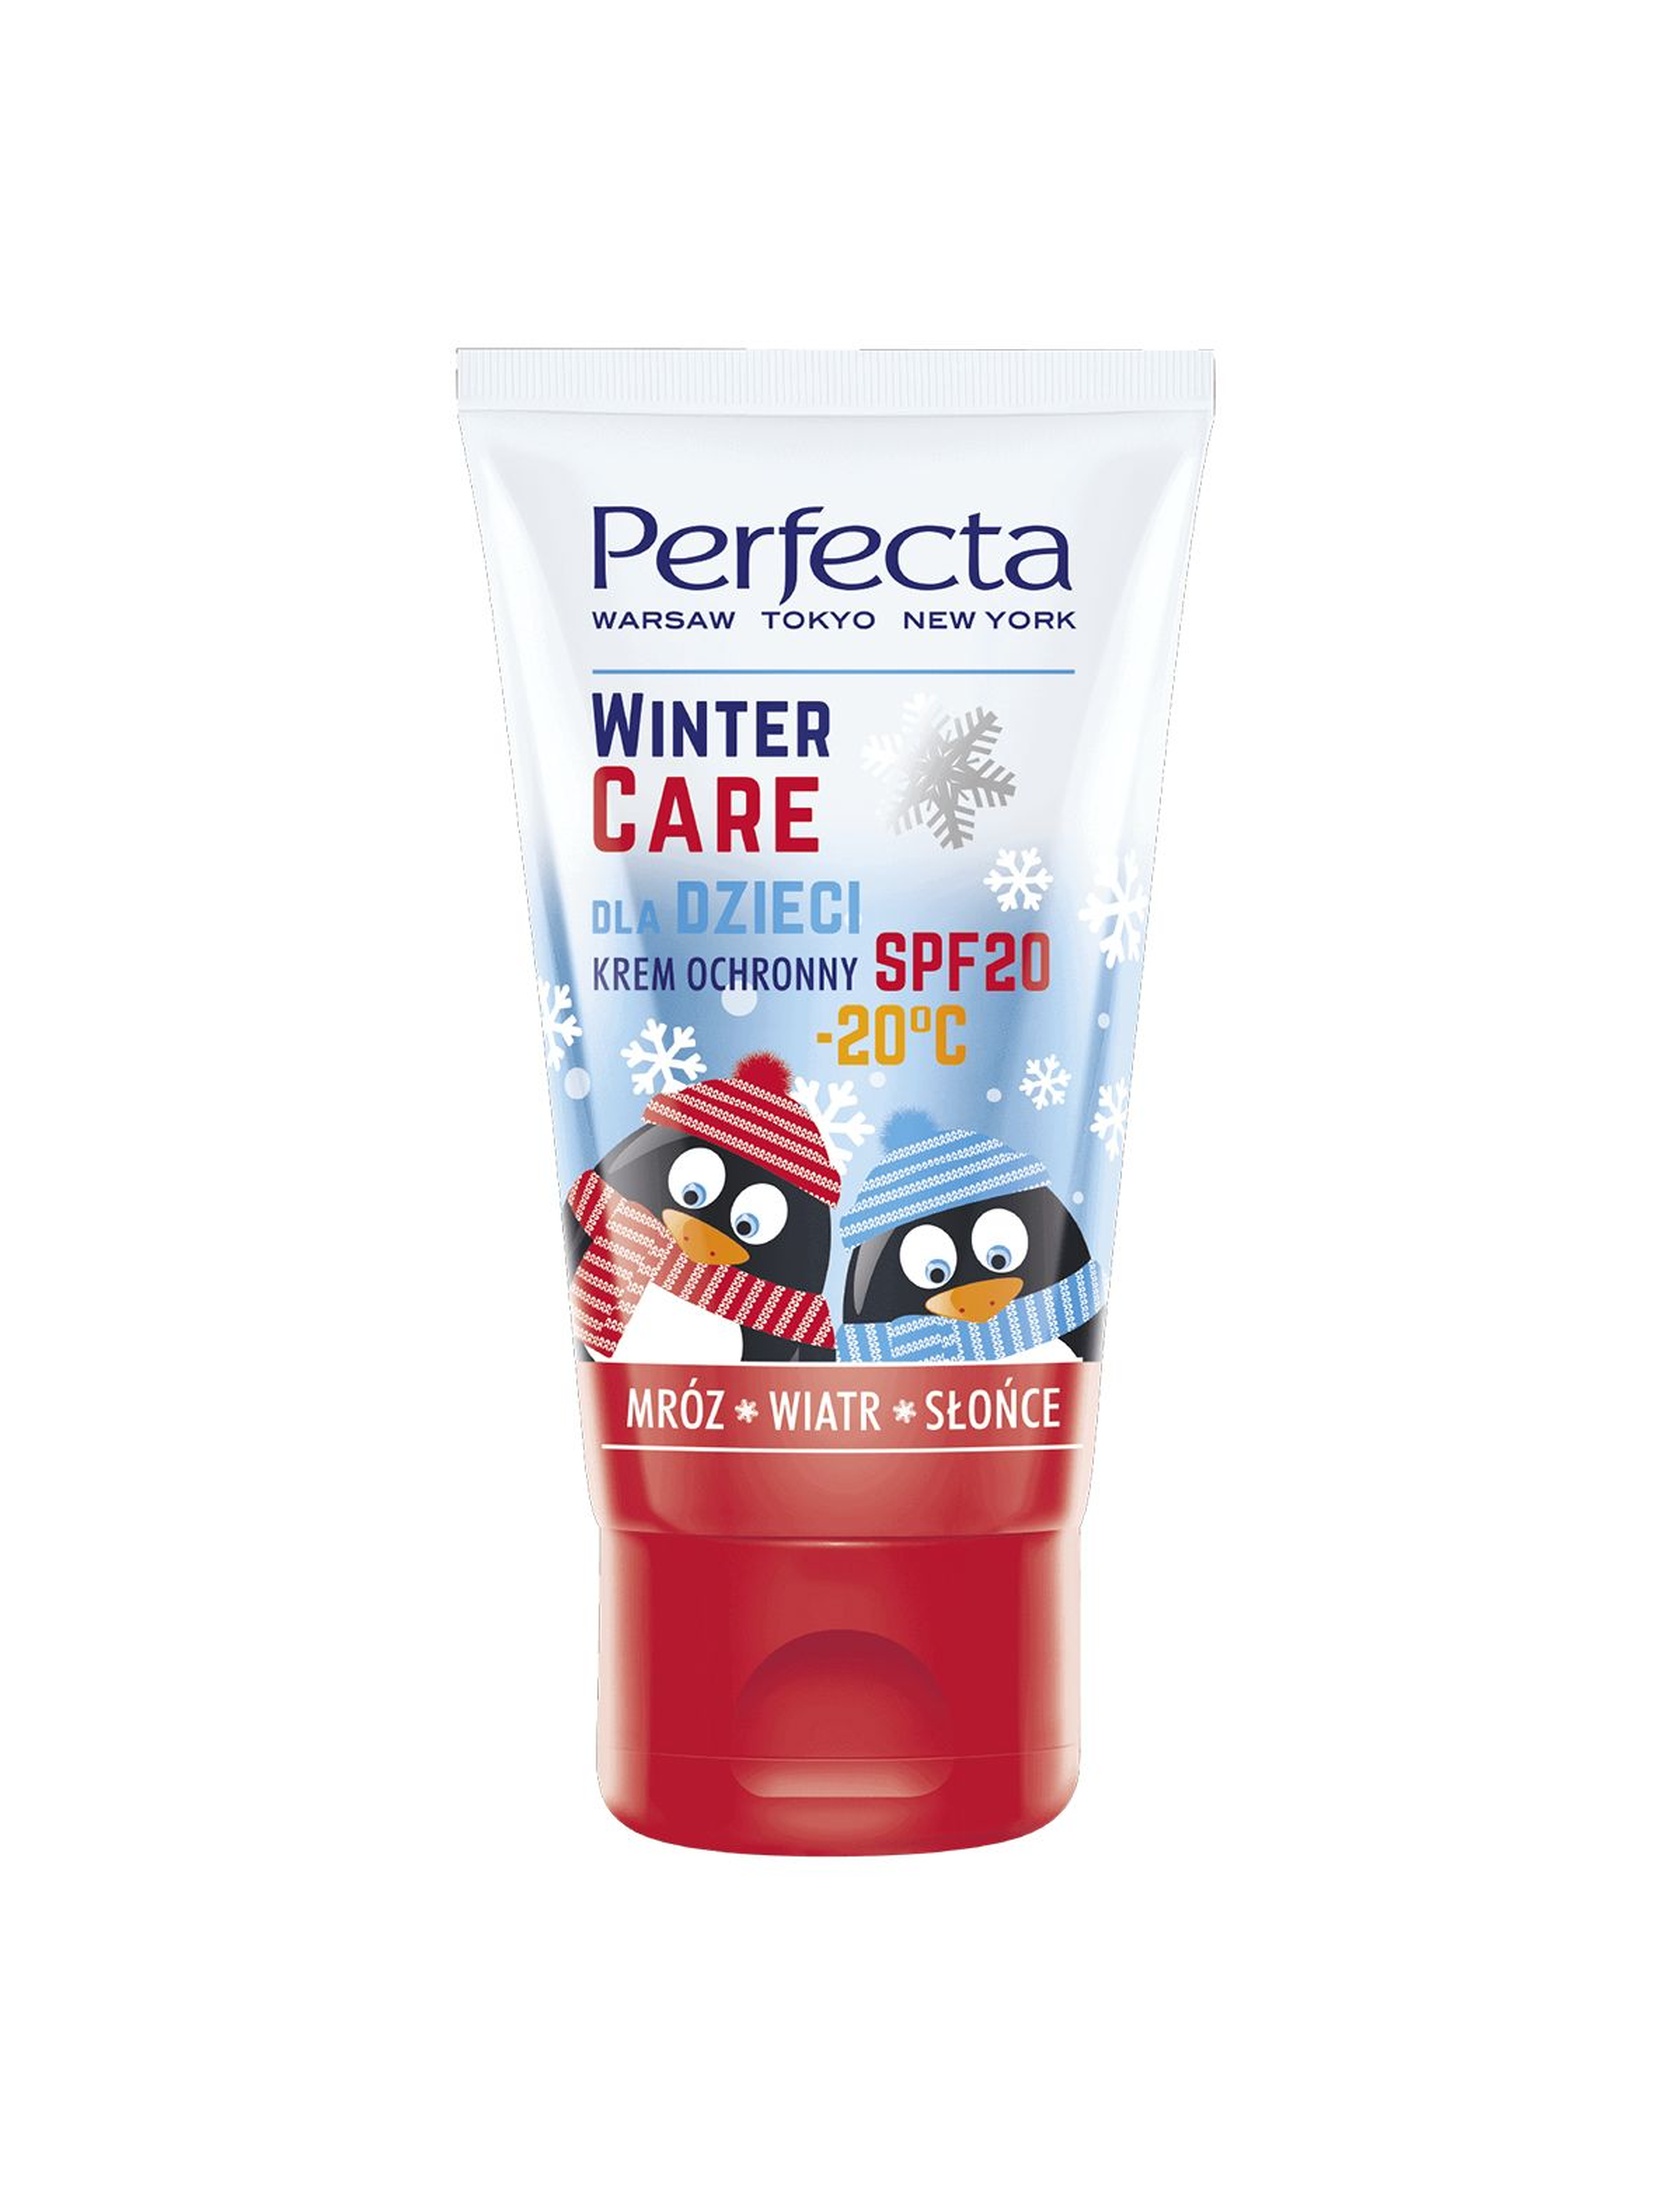 Perfecta Winter Care, krem ochronny dla dzieci SPF 20, 50ml